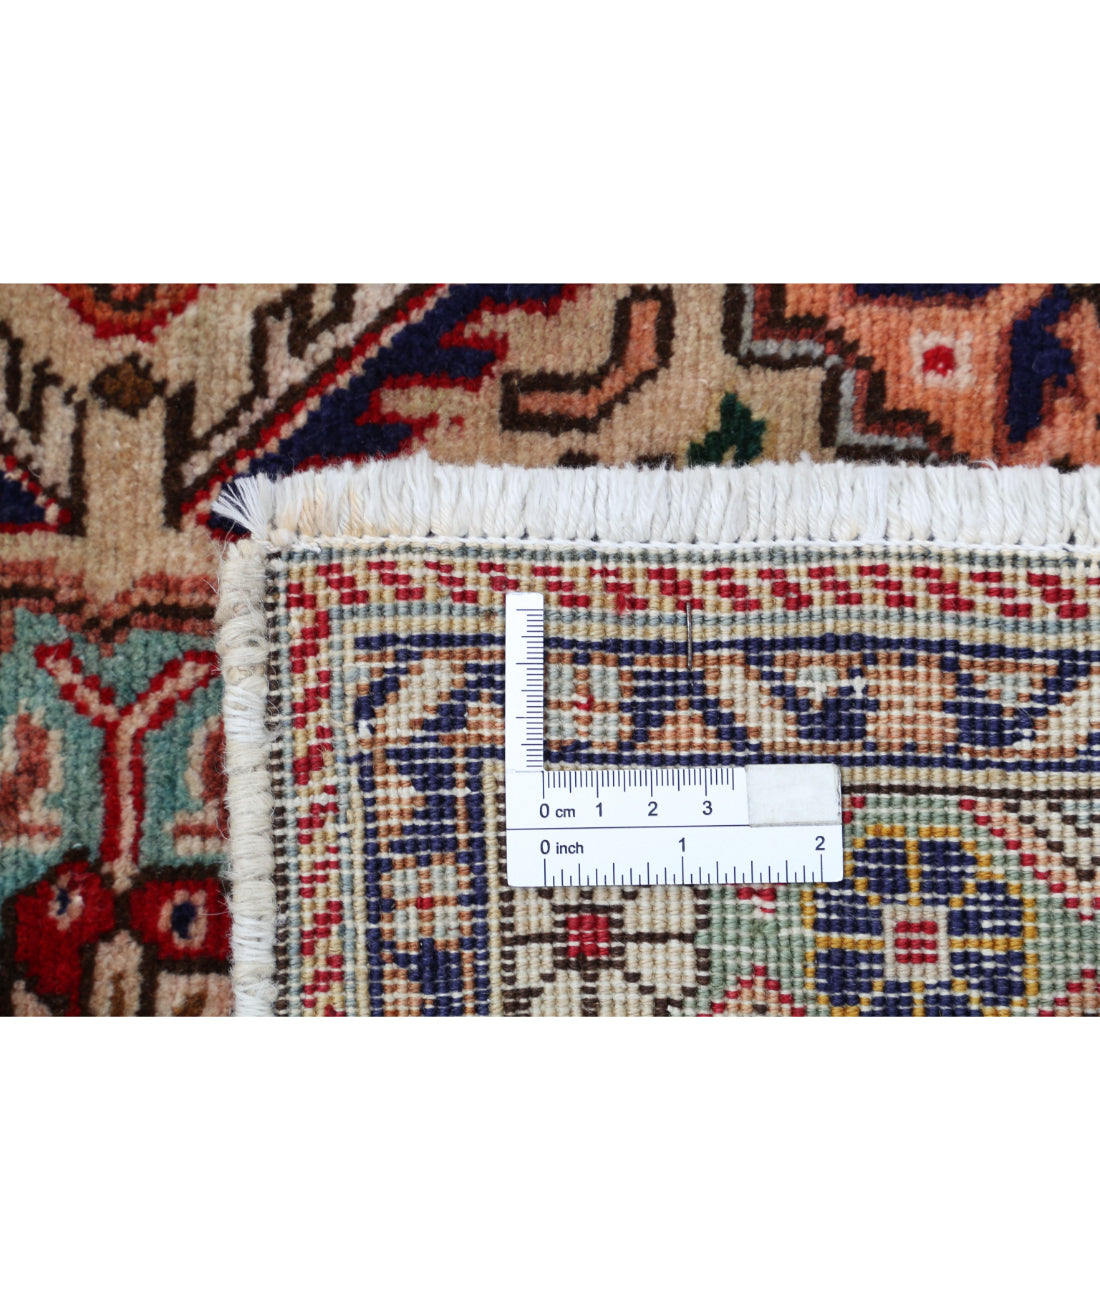 Hand Knotted Persian Tabriz Wool Rug - 9'8'' x 11'10'' 9'8'' x 11'10'' (290 X 355) / Beige / Rust